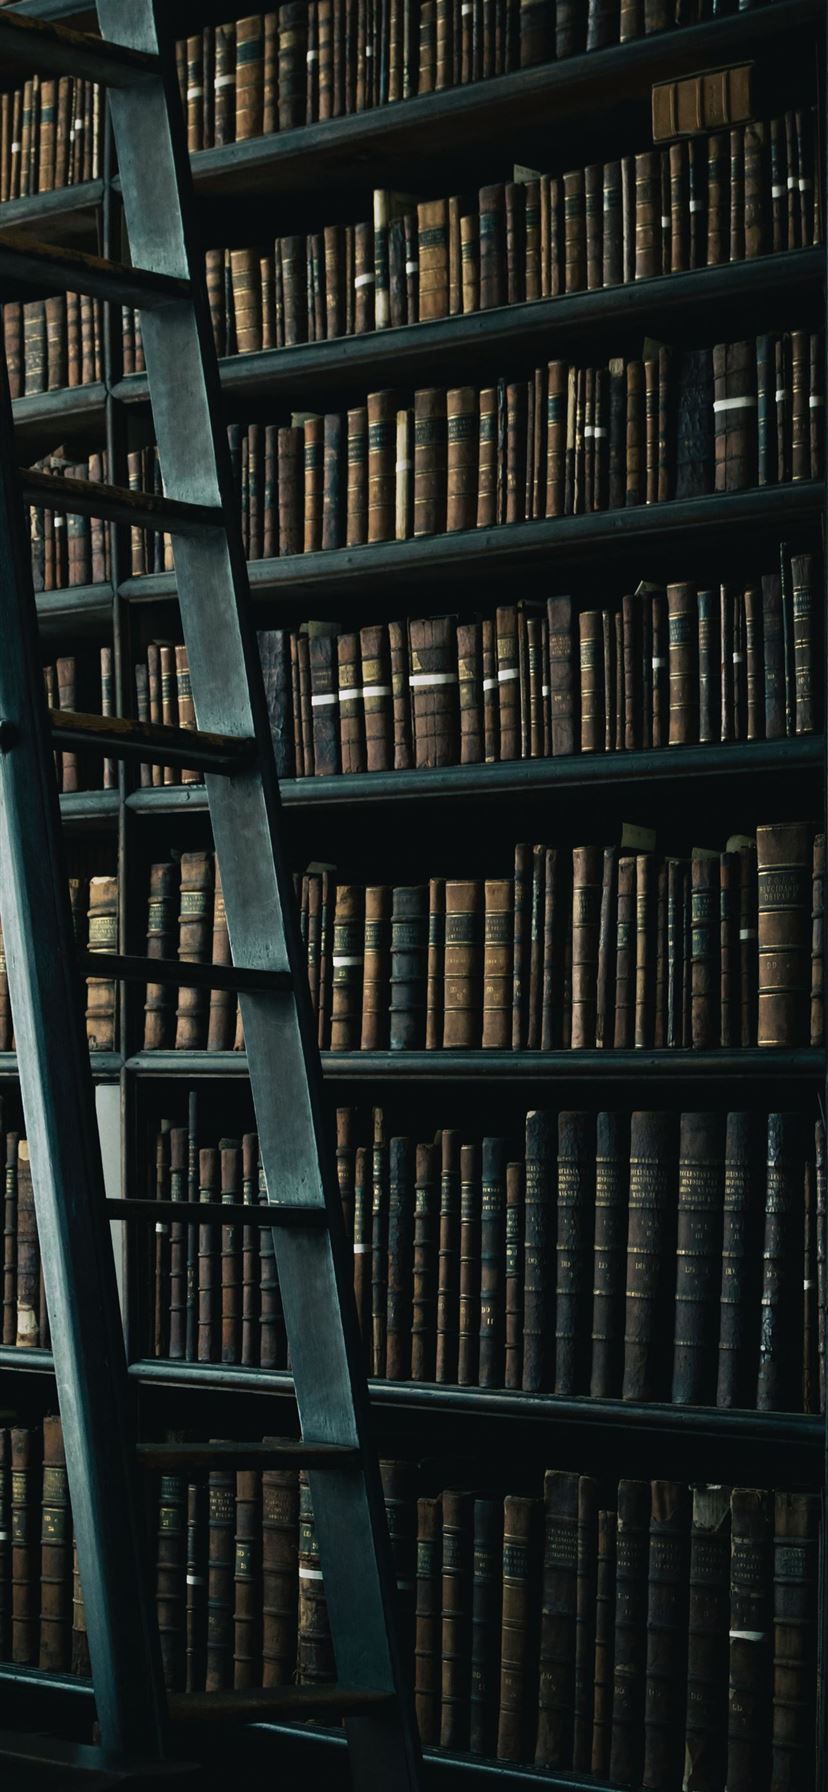 A ladder leaning against a bookshelf full of books - Books